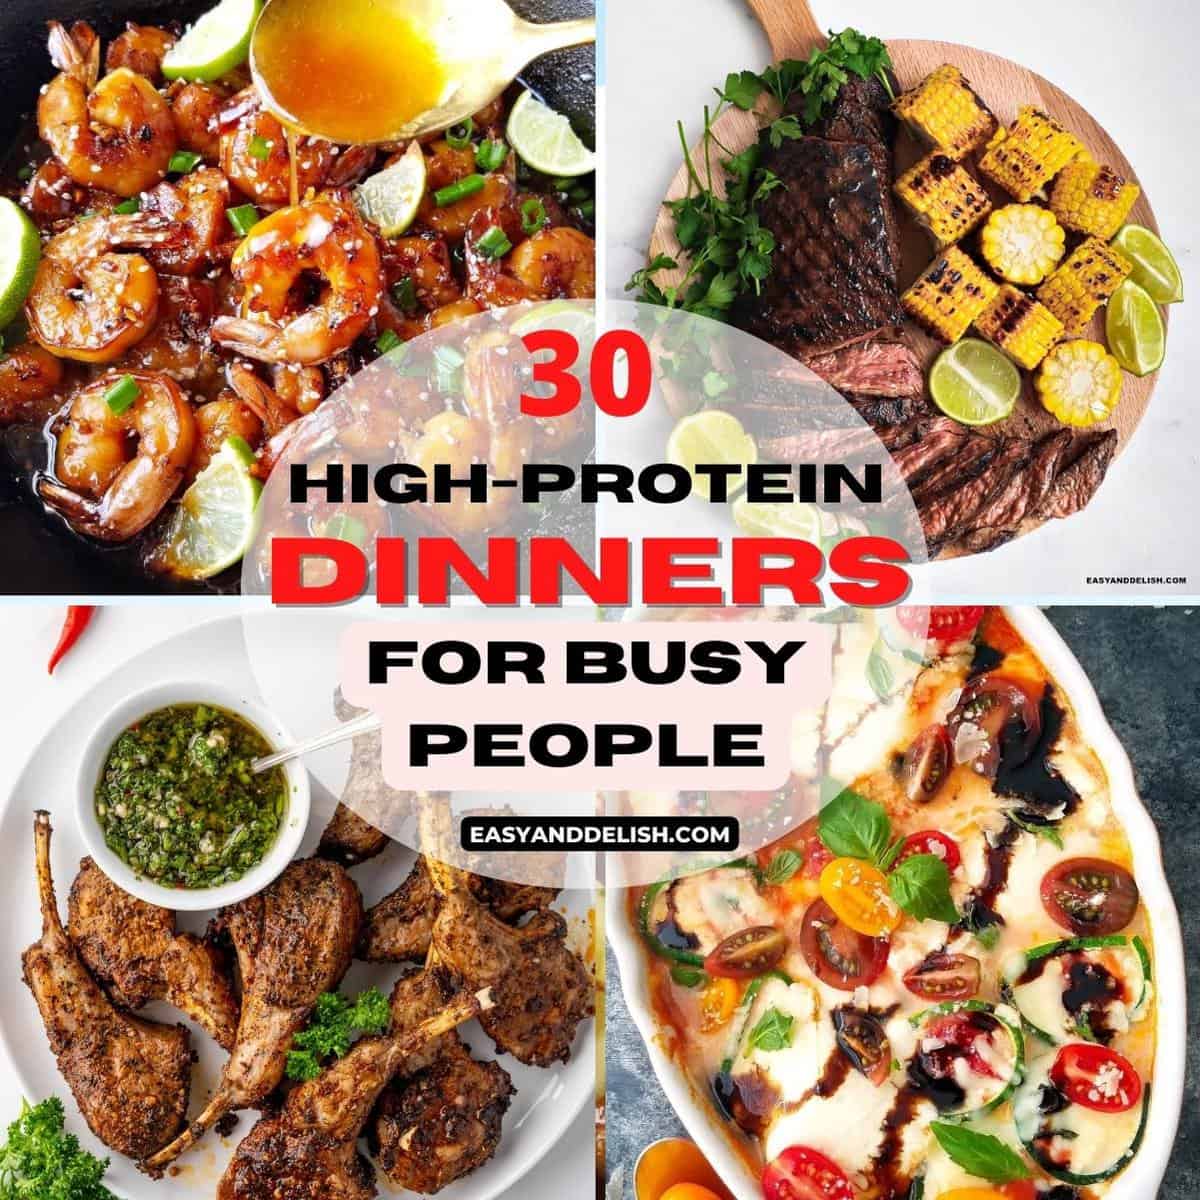 30 Easy High-Protein, High-Fiber Dinner Recipes